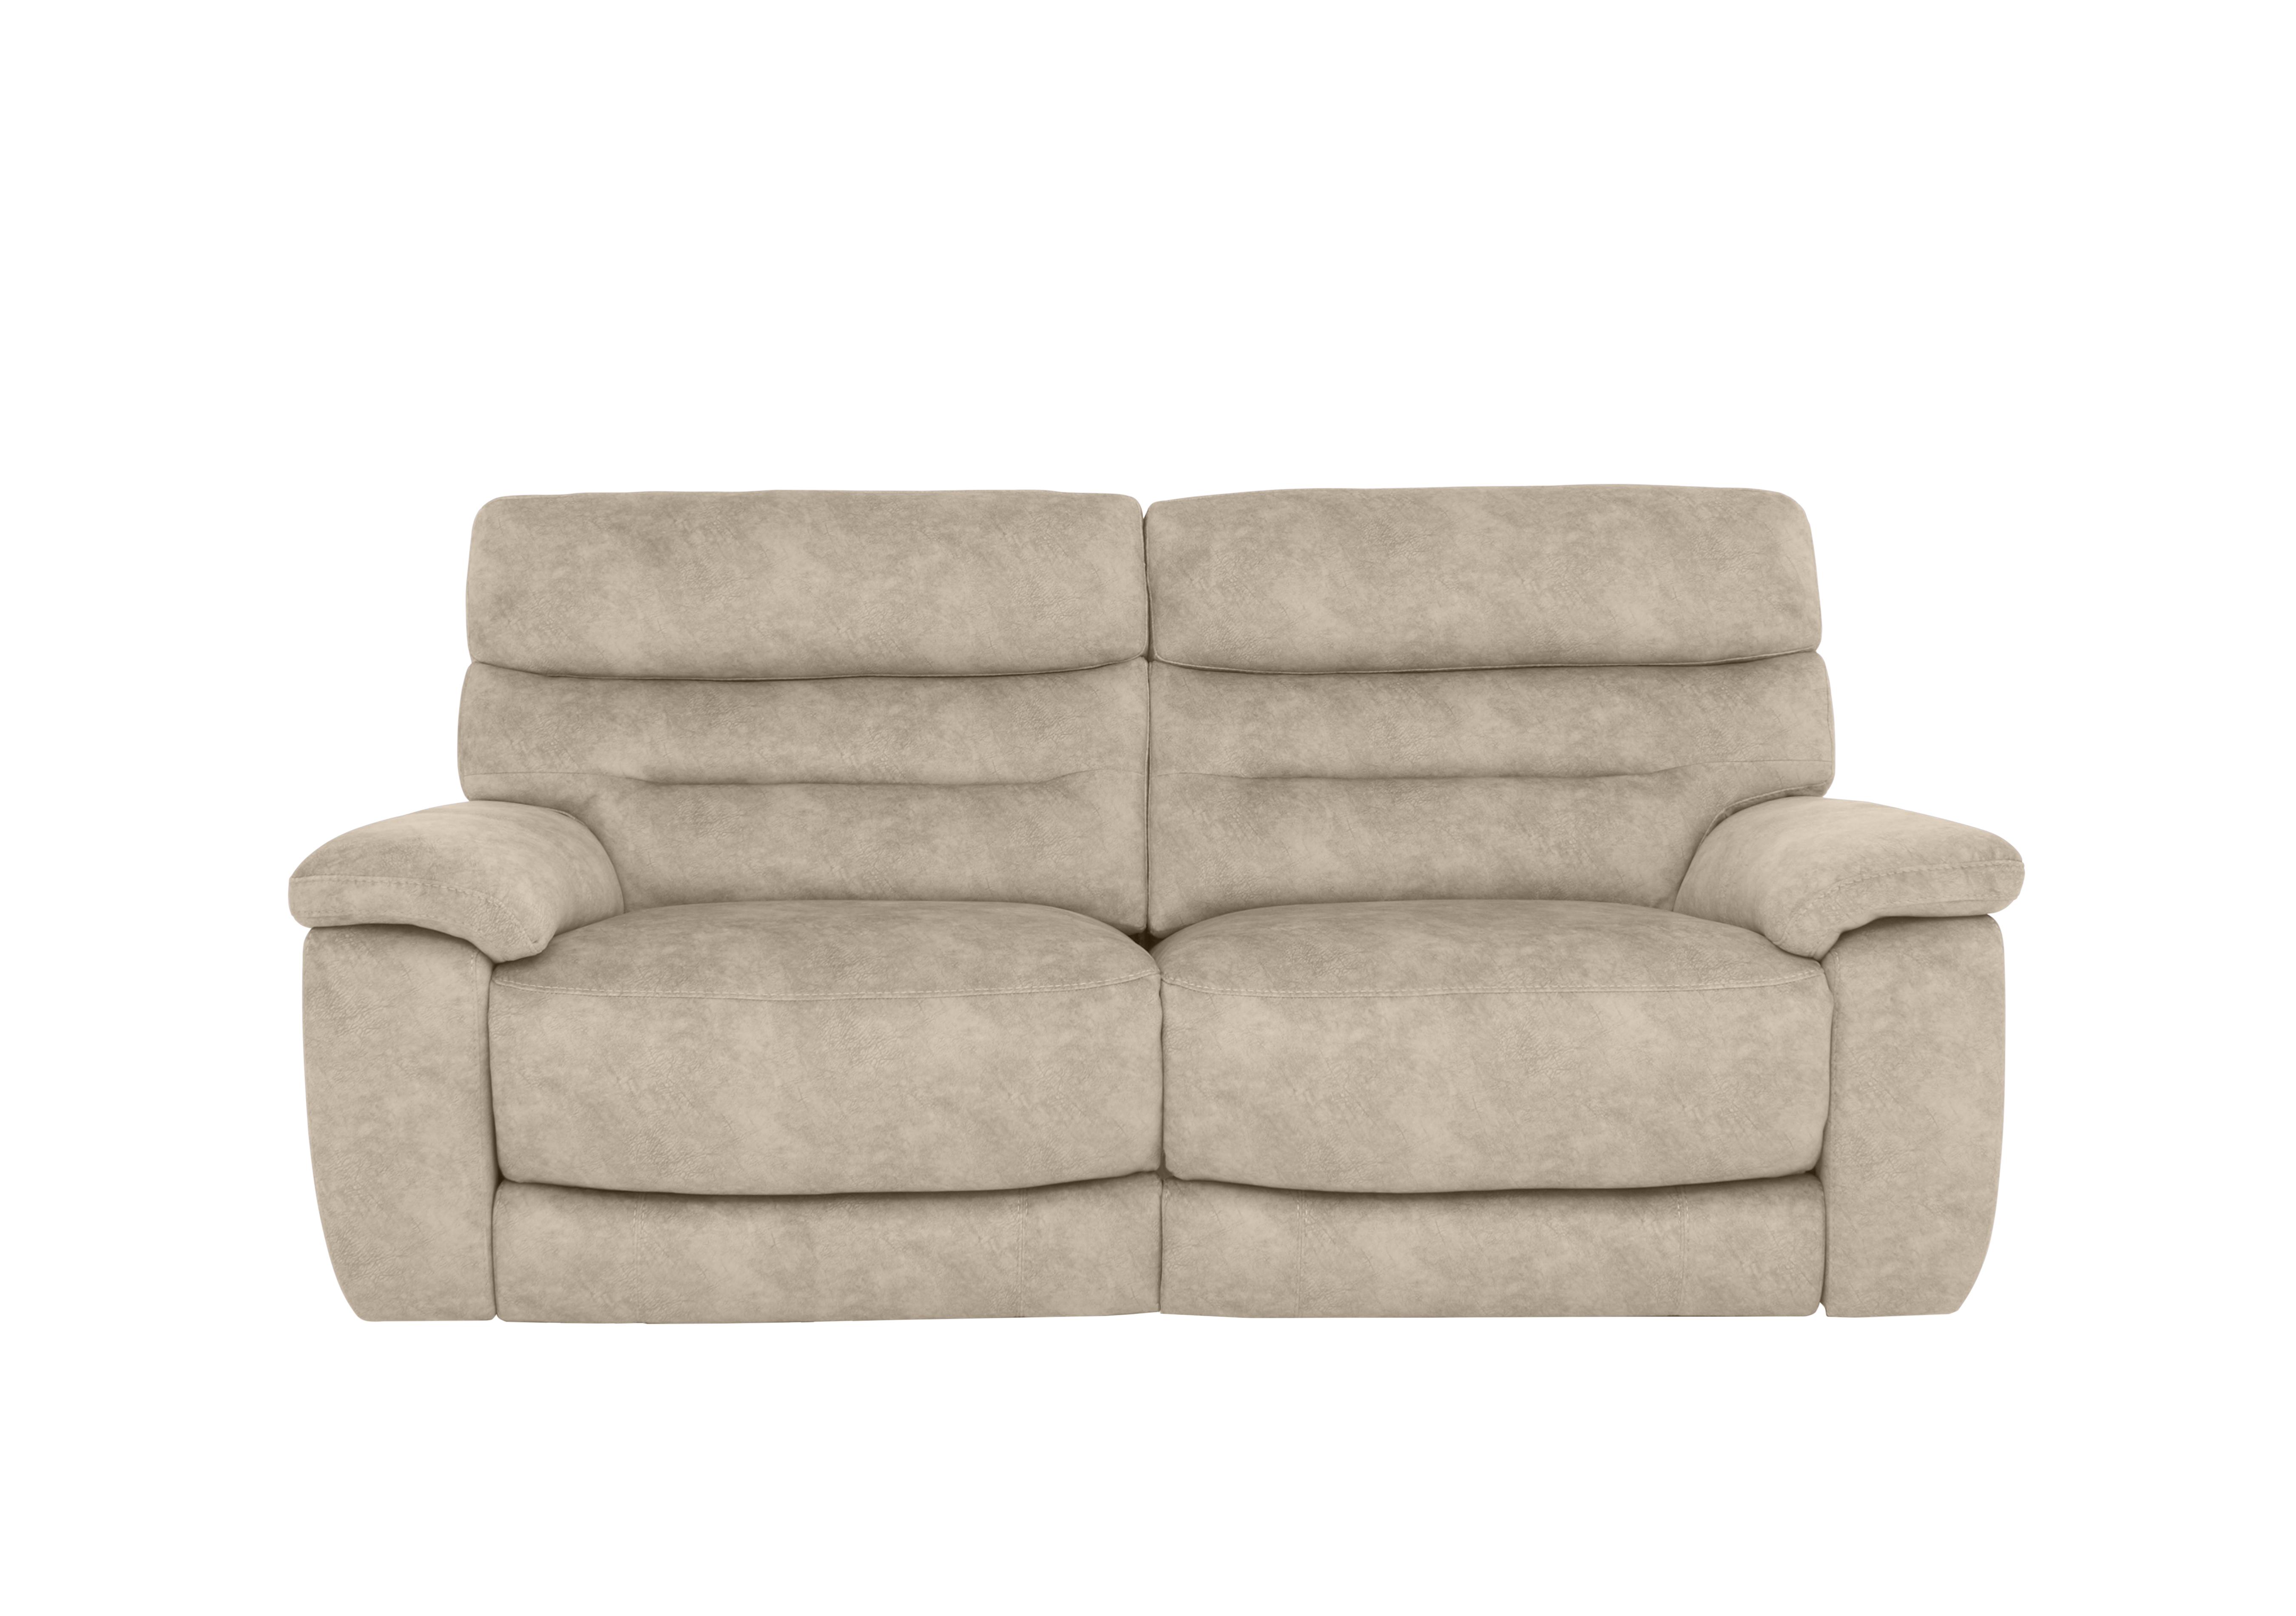 Nimbus 3 Seater Fabric Power Recliner Sofa with Power Headrests in Bfa-Bnn-R26 Cream on Furniture Village